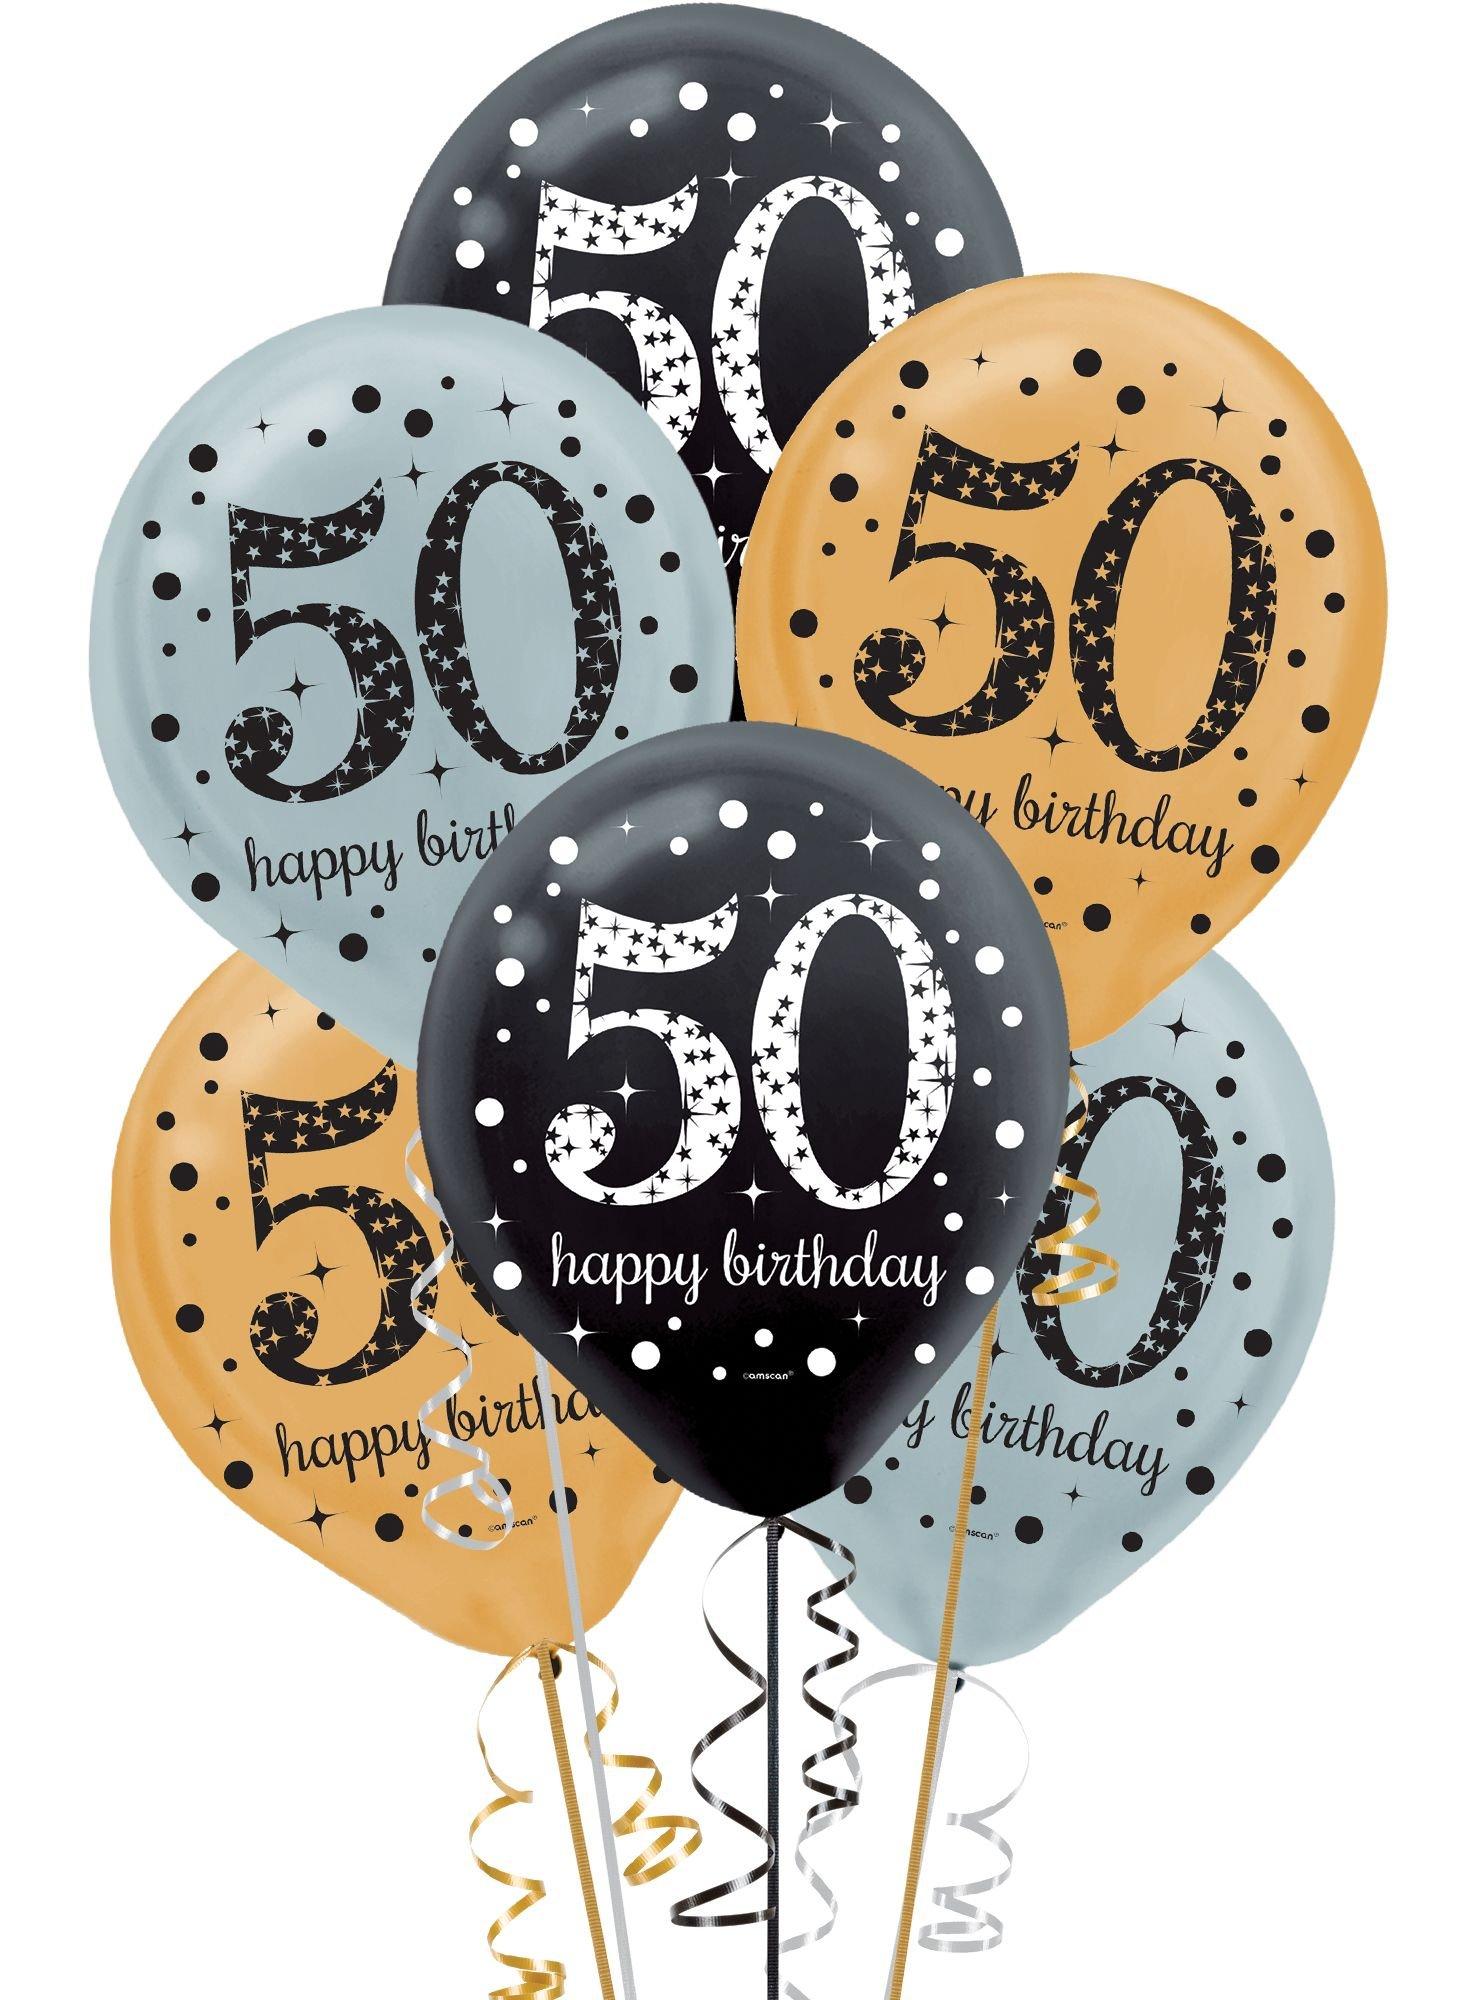 Interconectar Tener cuidado Saco 50th Birthday Balloons 15ct - Sparkling Celebration | Party City